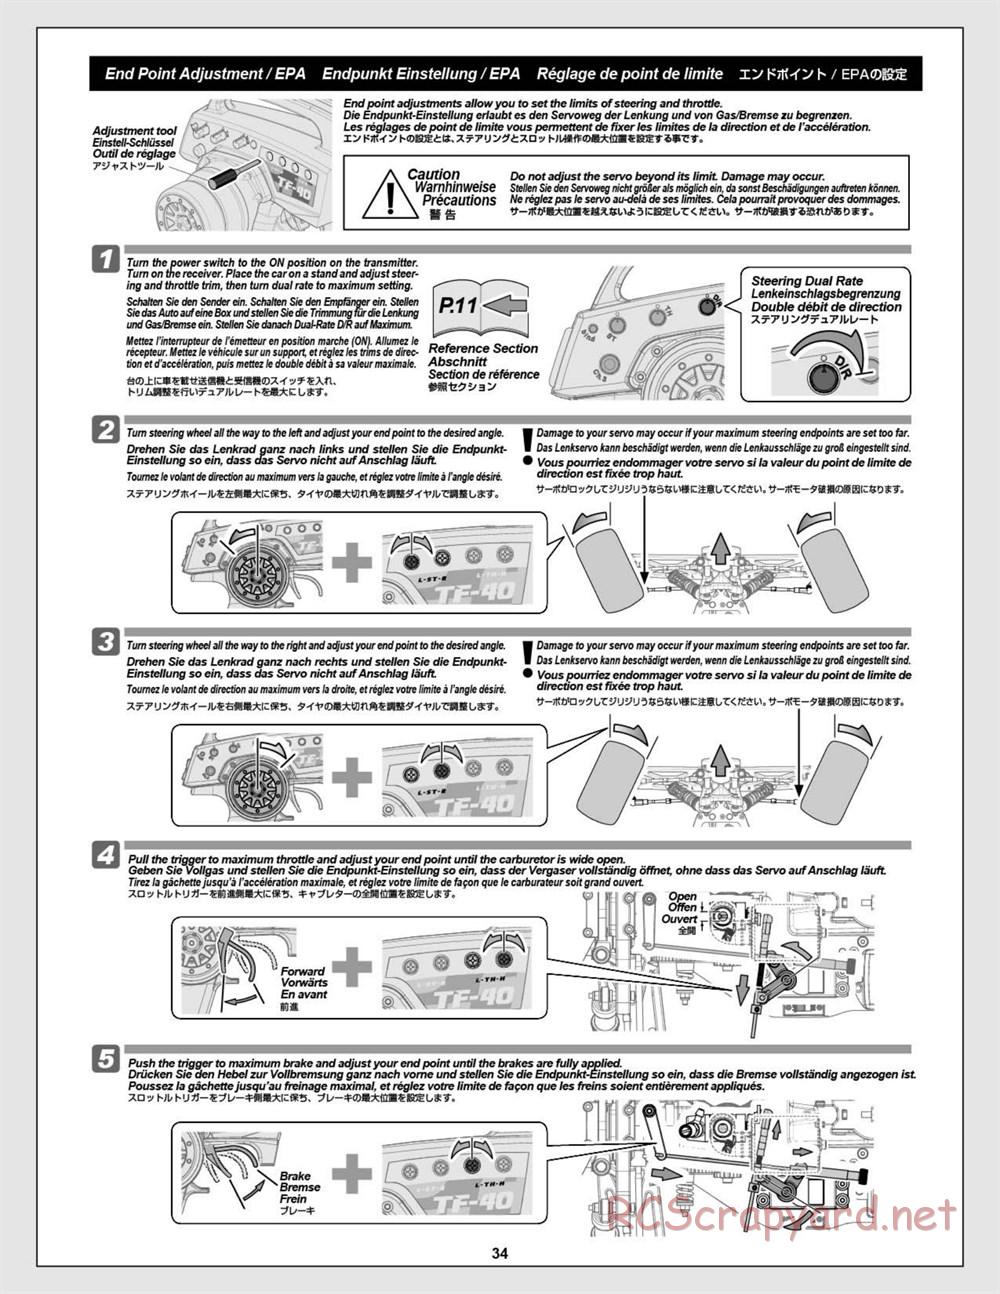 HPI - Firestorm 10T - Manual - Page 34